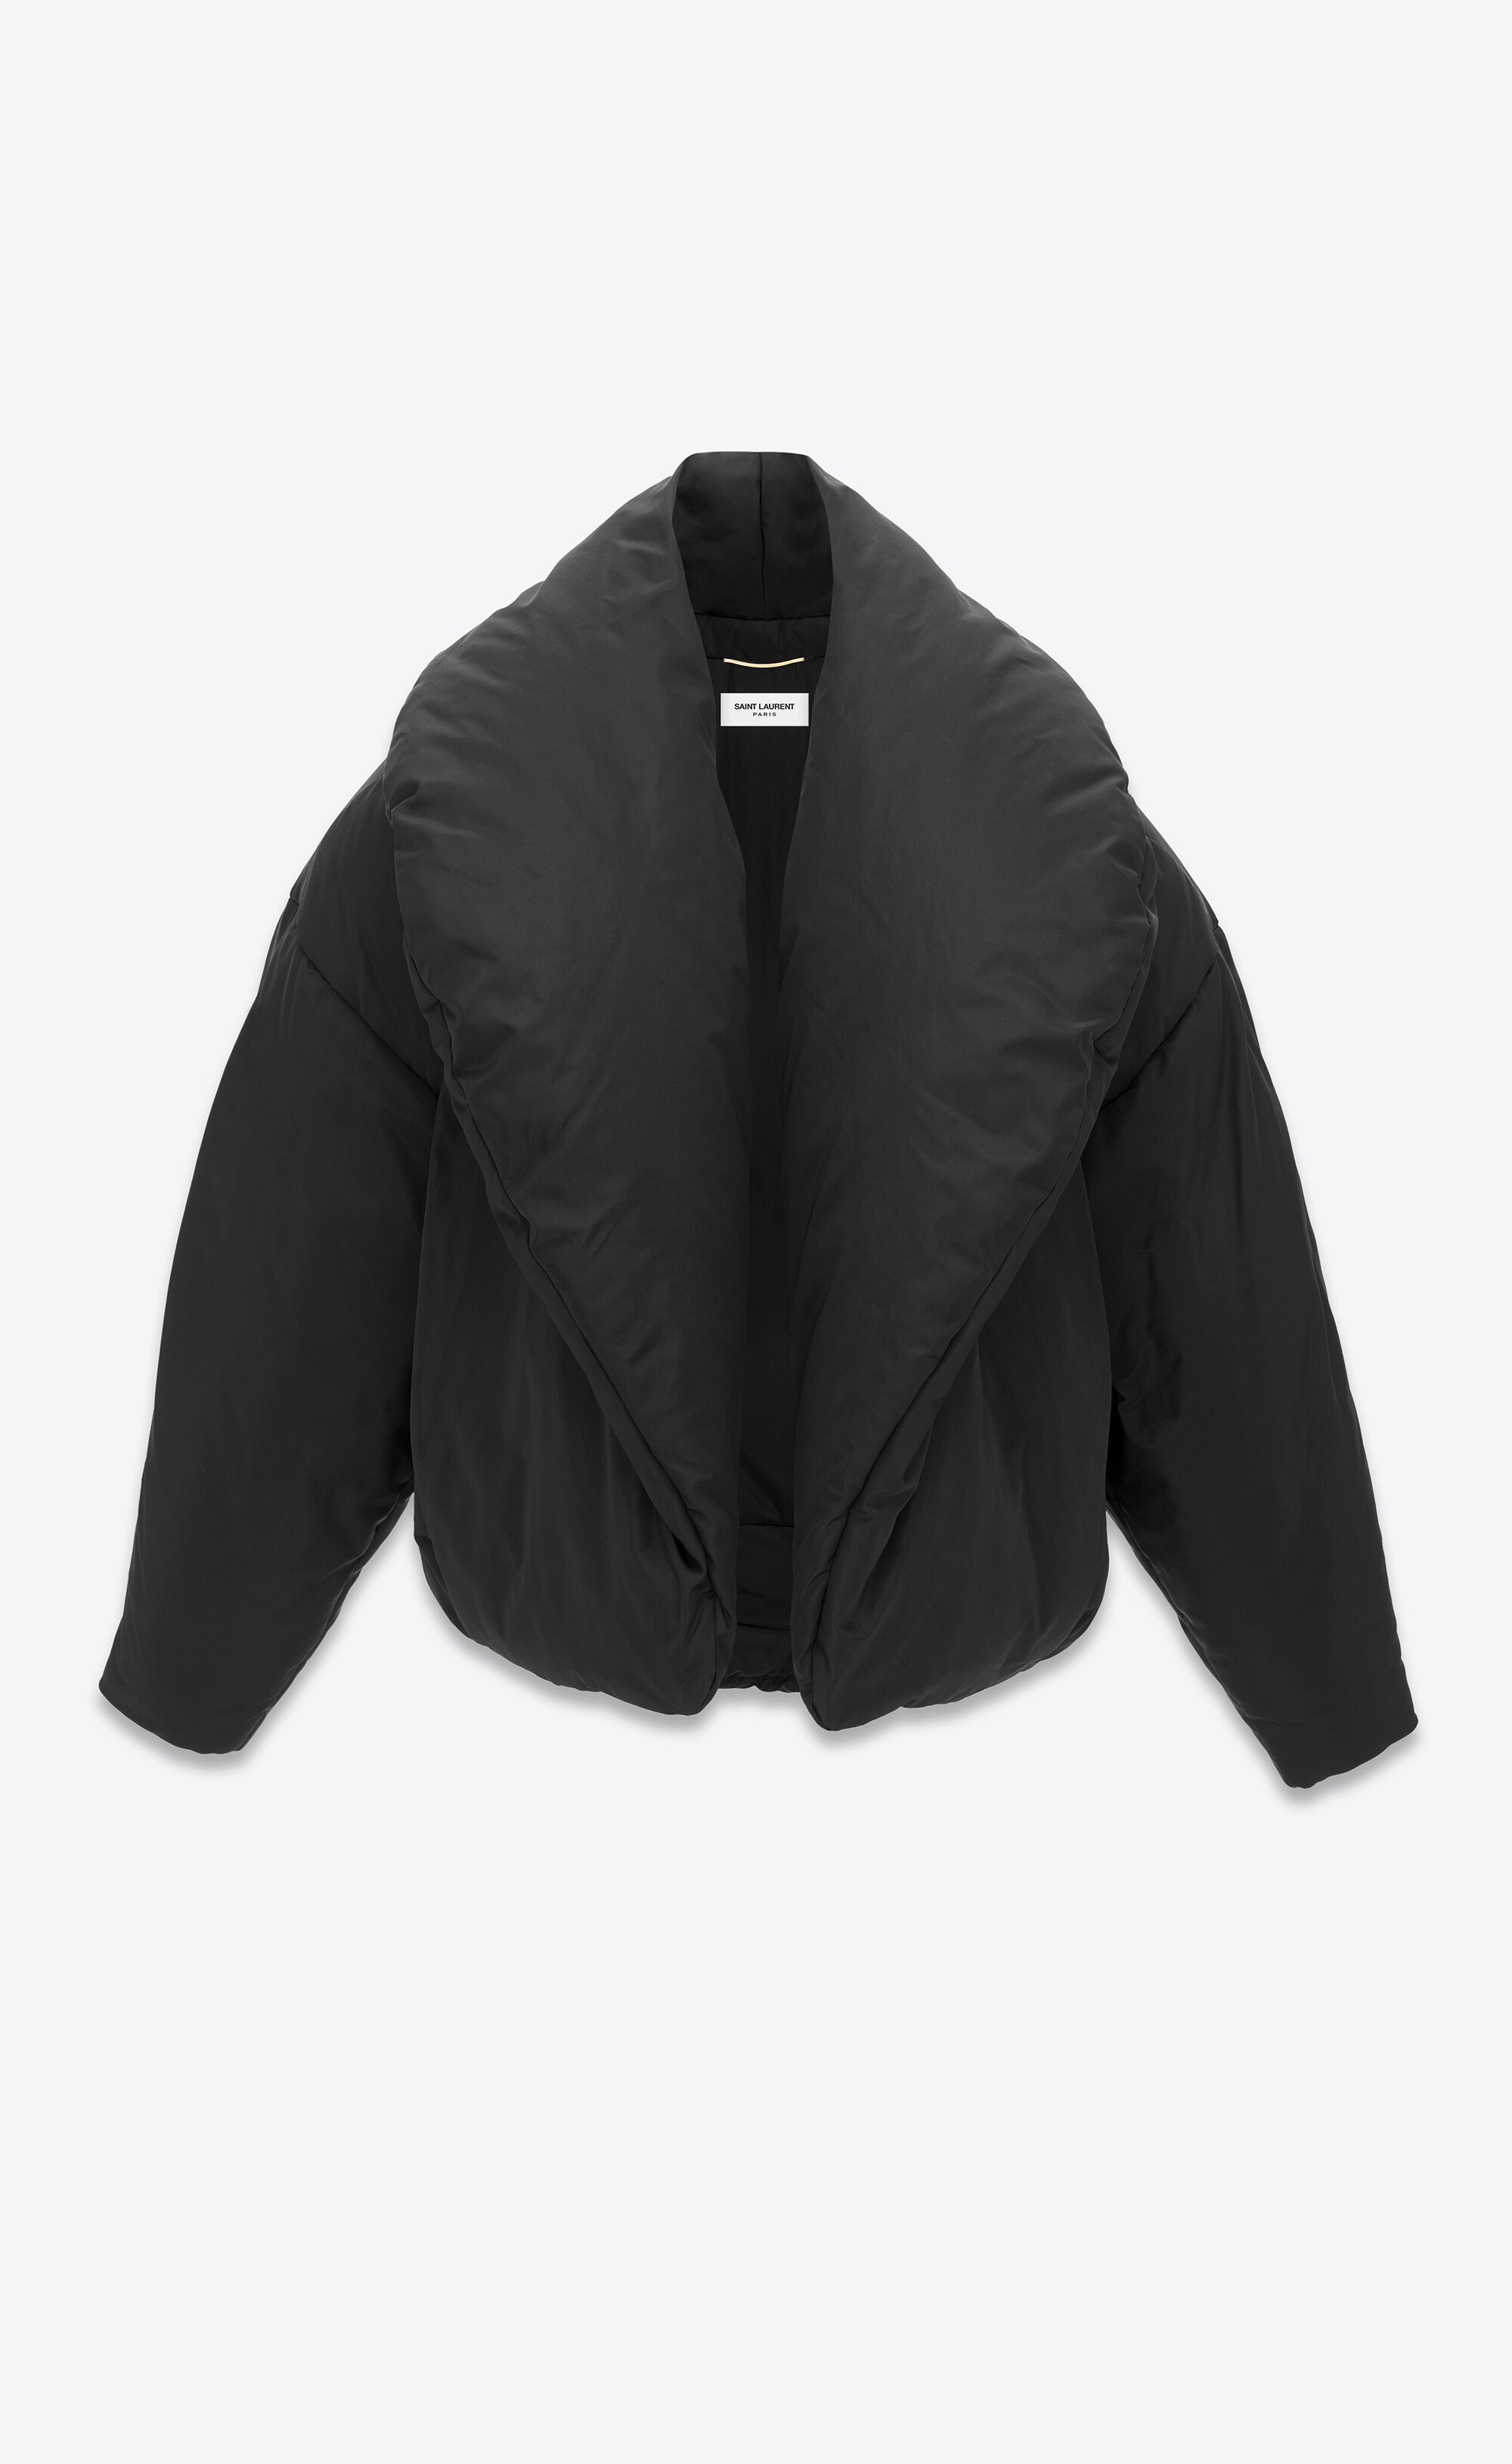 Yves Saint Laurent Taffeta Blouse/Jacket